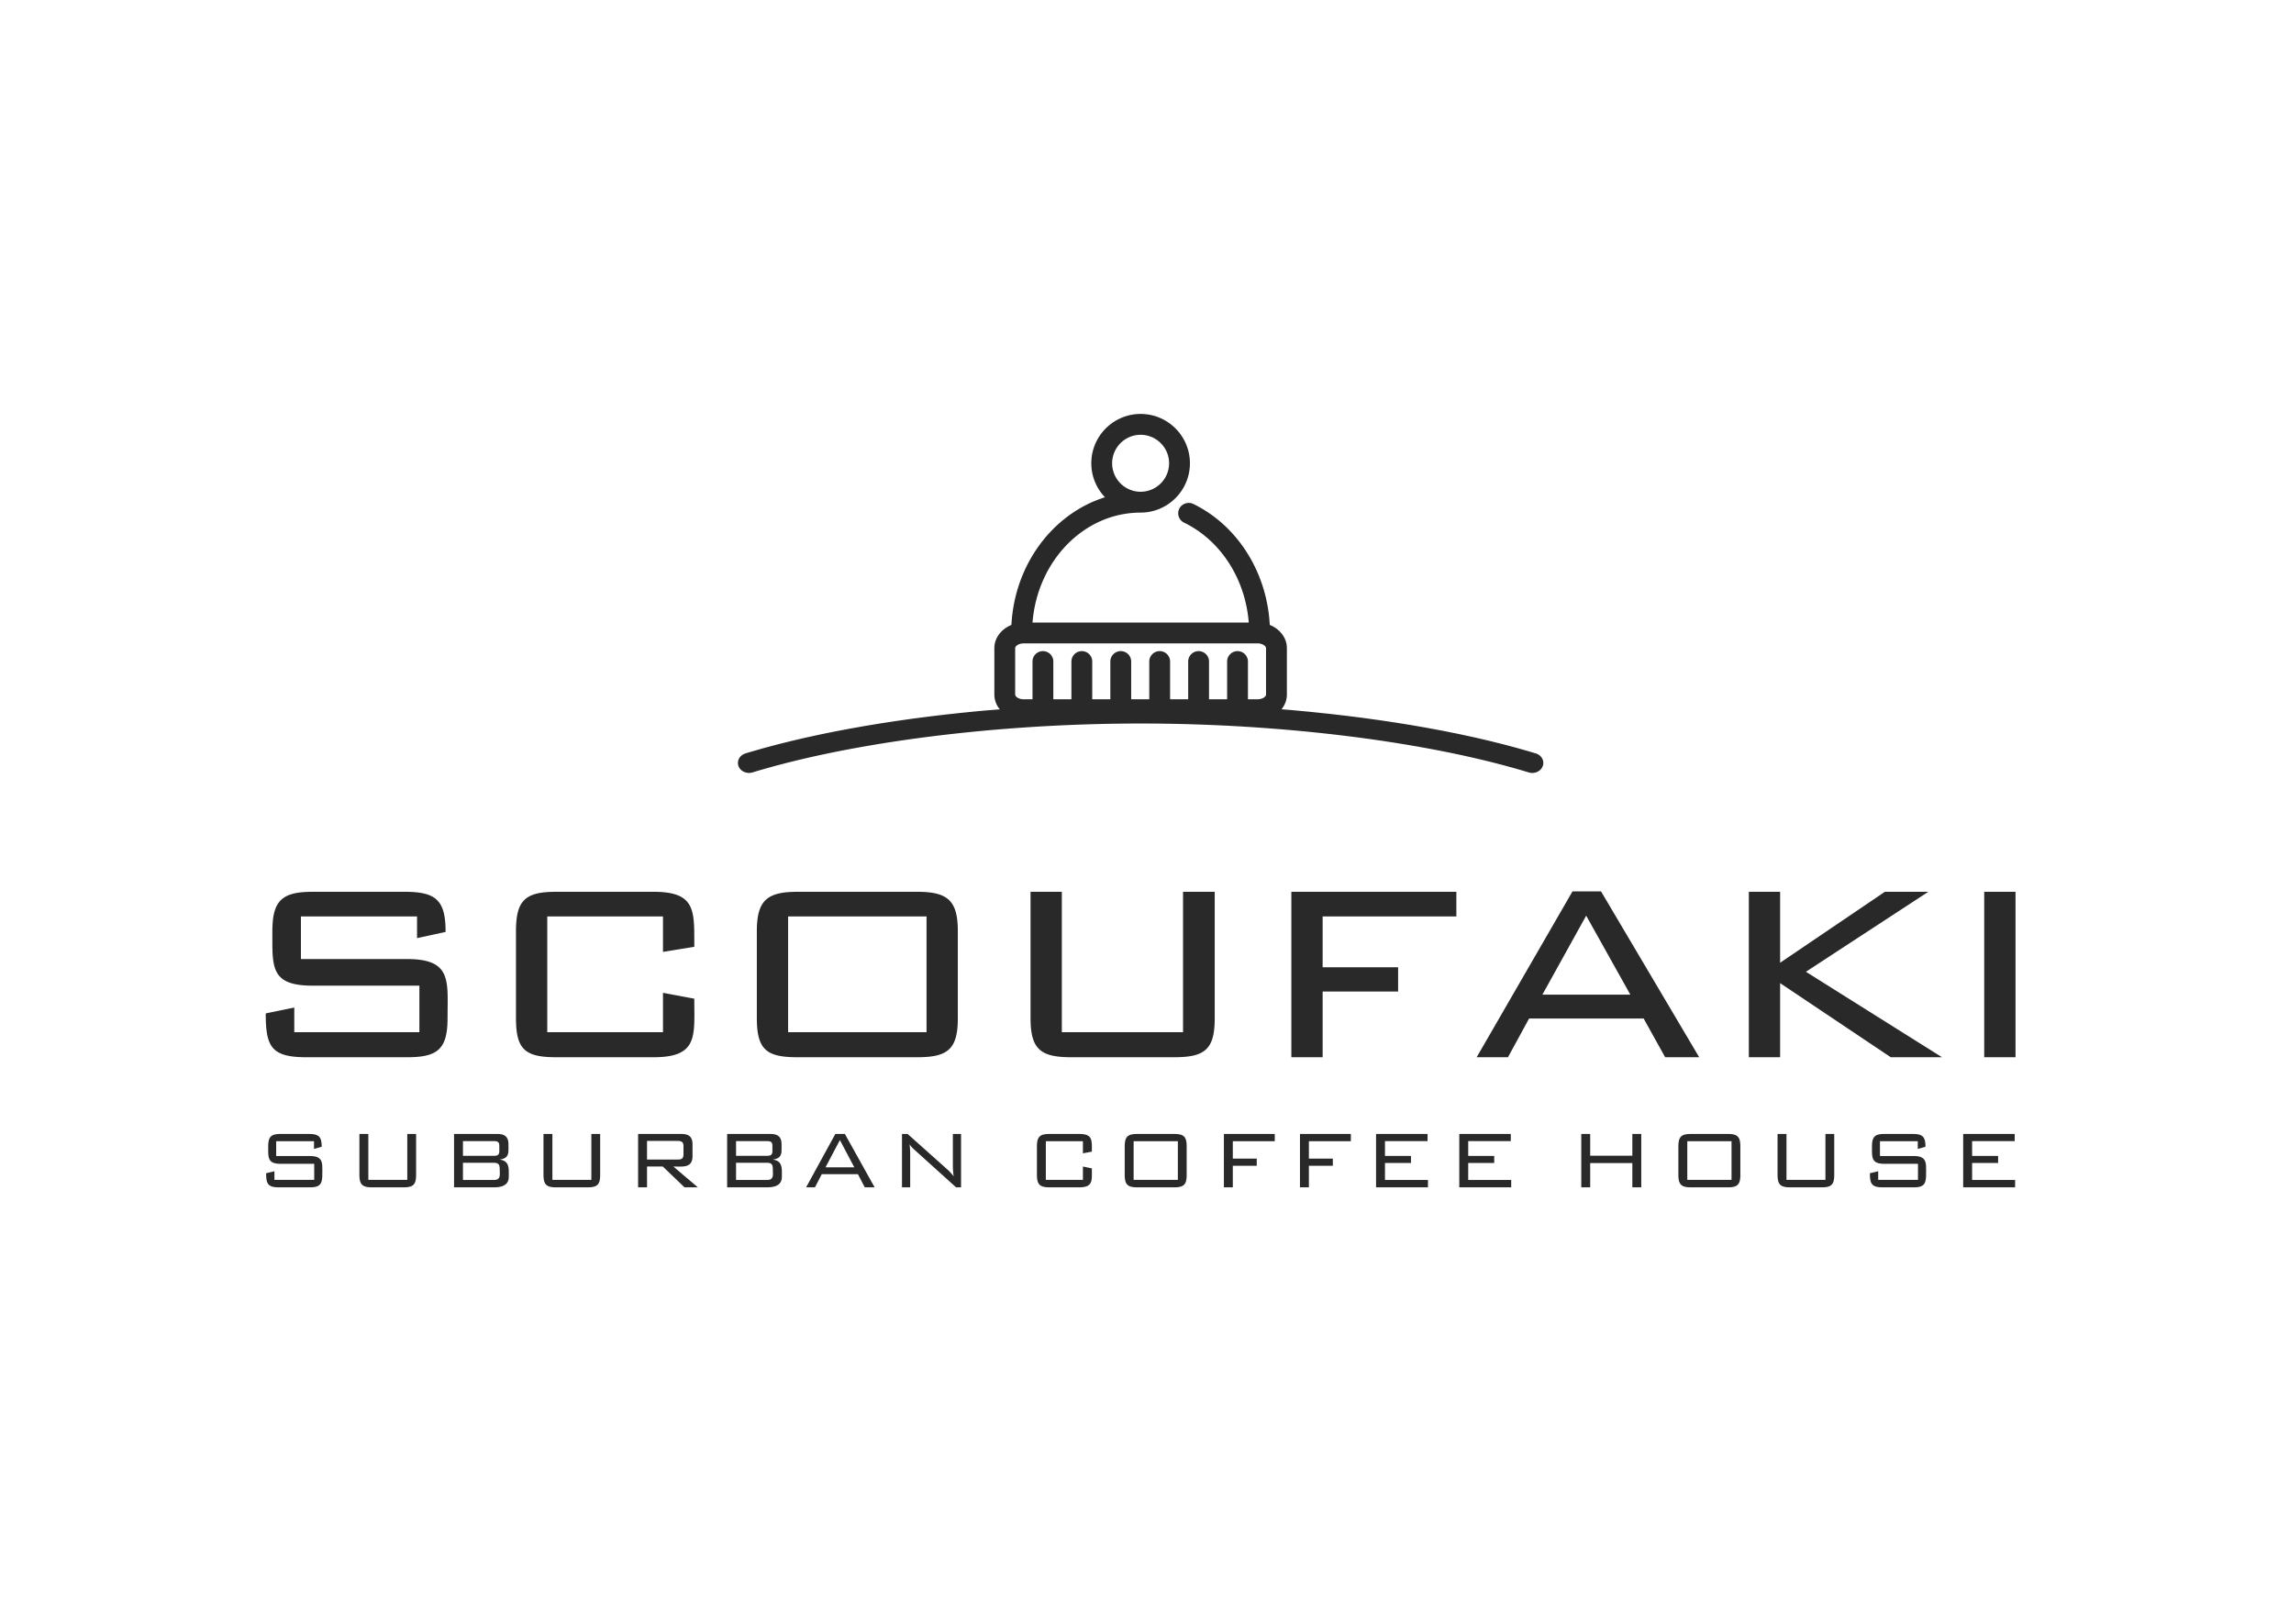 Scoufaki Suburban Coffee House